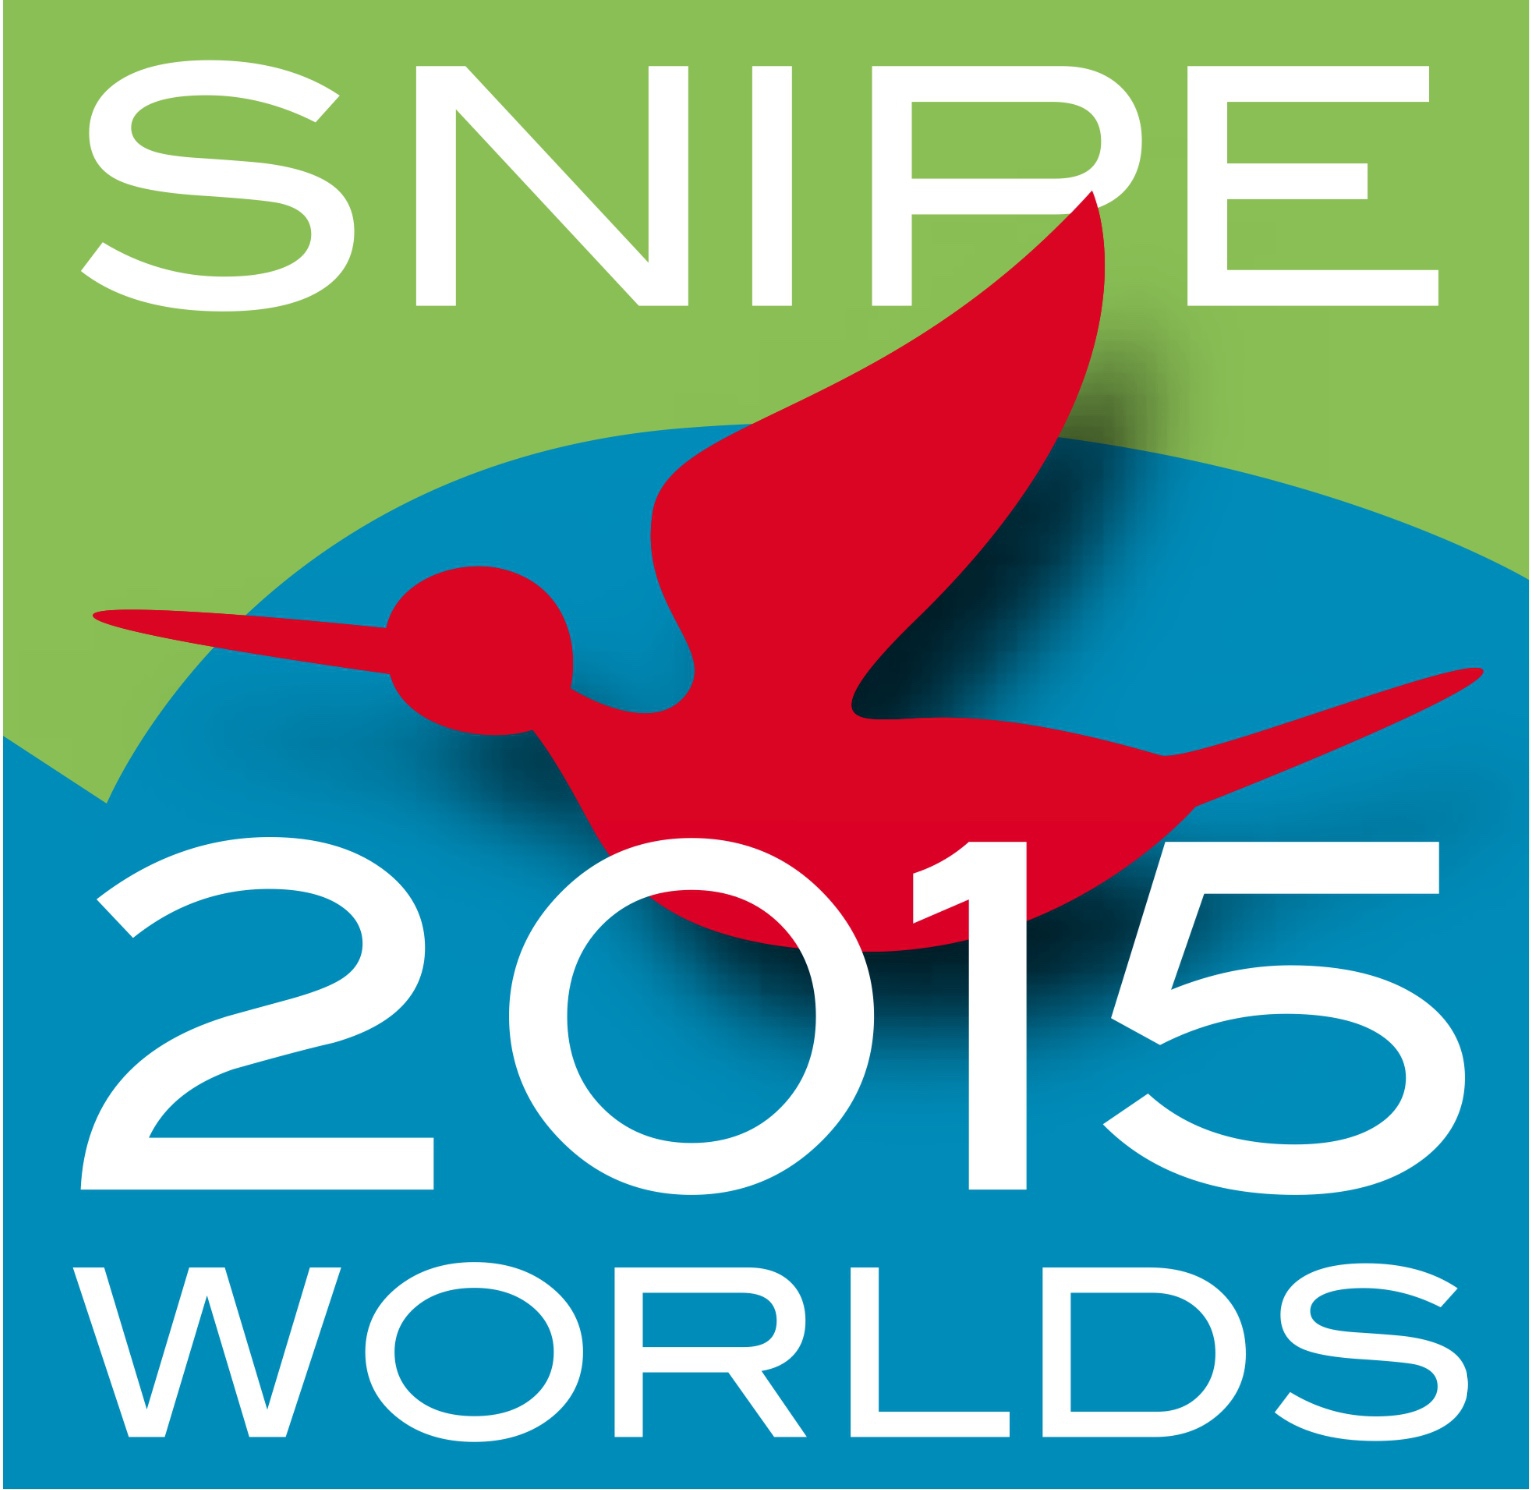 2015 Snipe Worlds Quotas Image